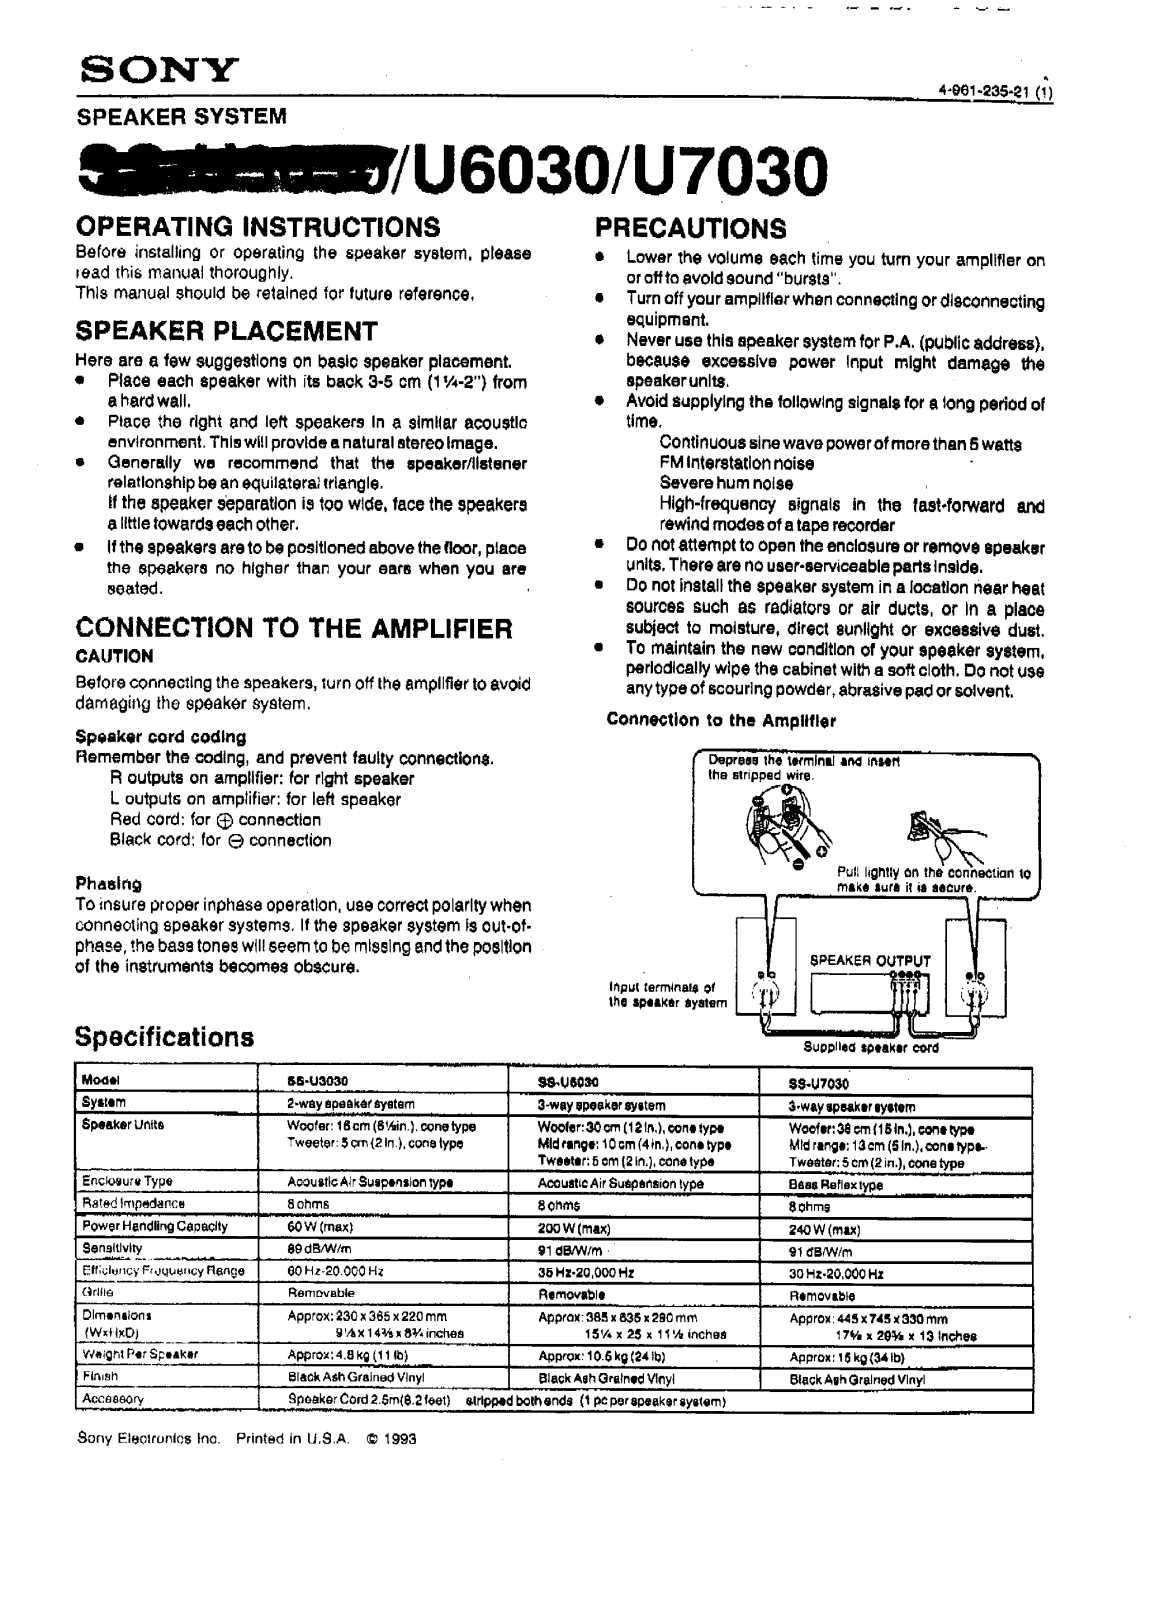 Sony SS-U3030 User Manual